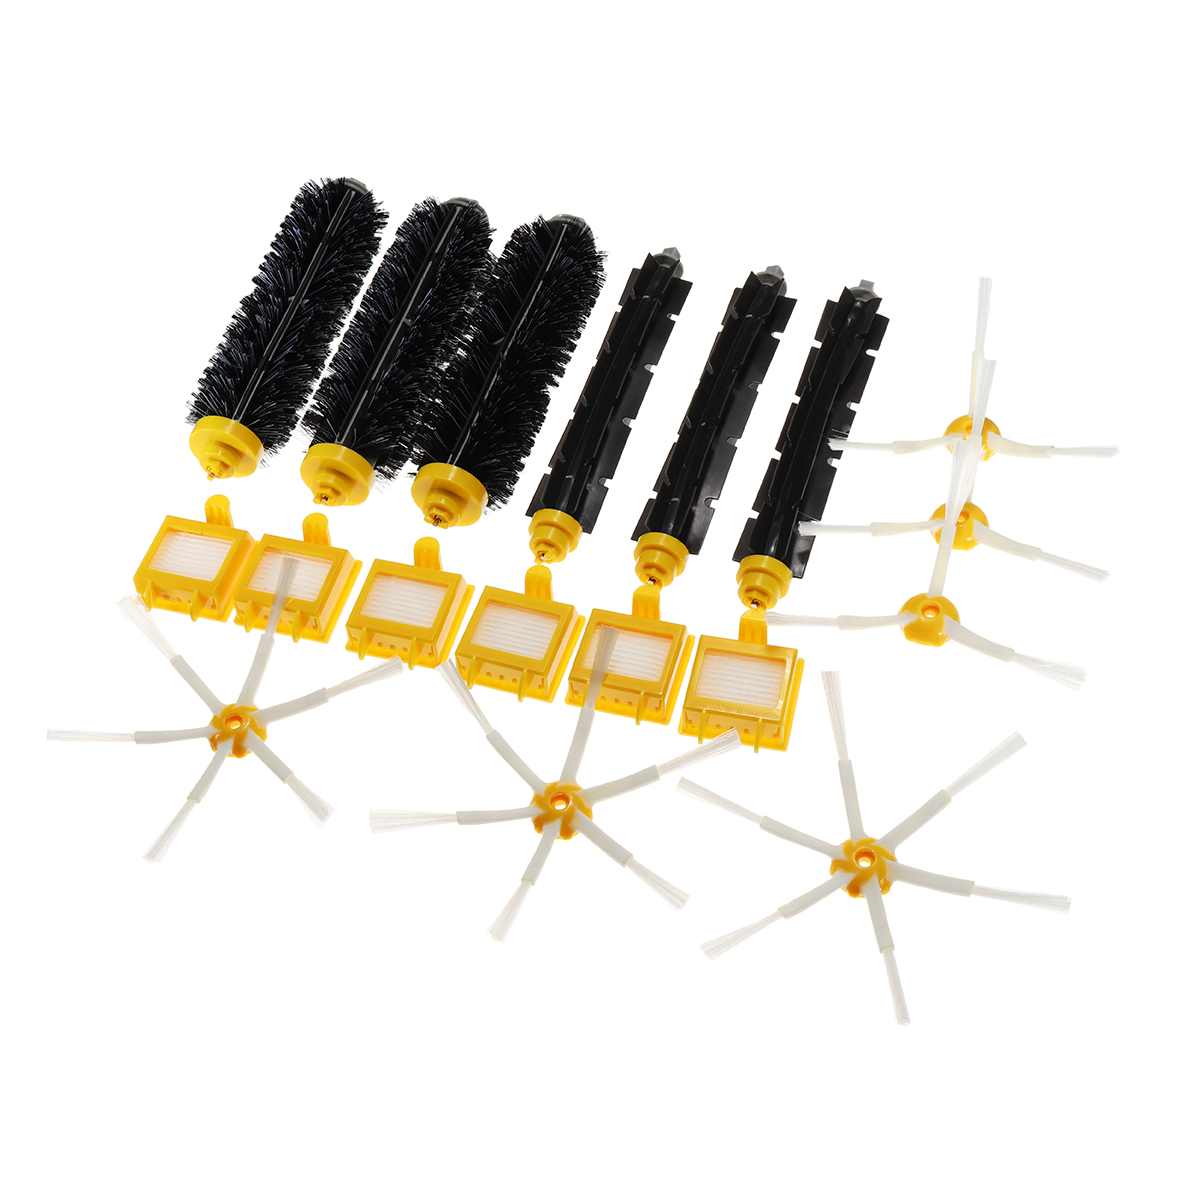 

18pcs 6 Armed Brush Filter Kit for iRobot Roomba Vacuum 700 Series 760 770 780